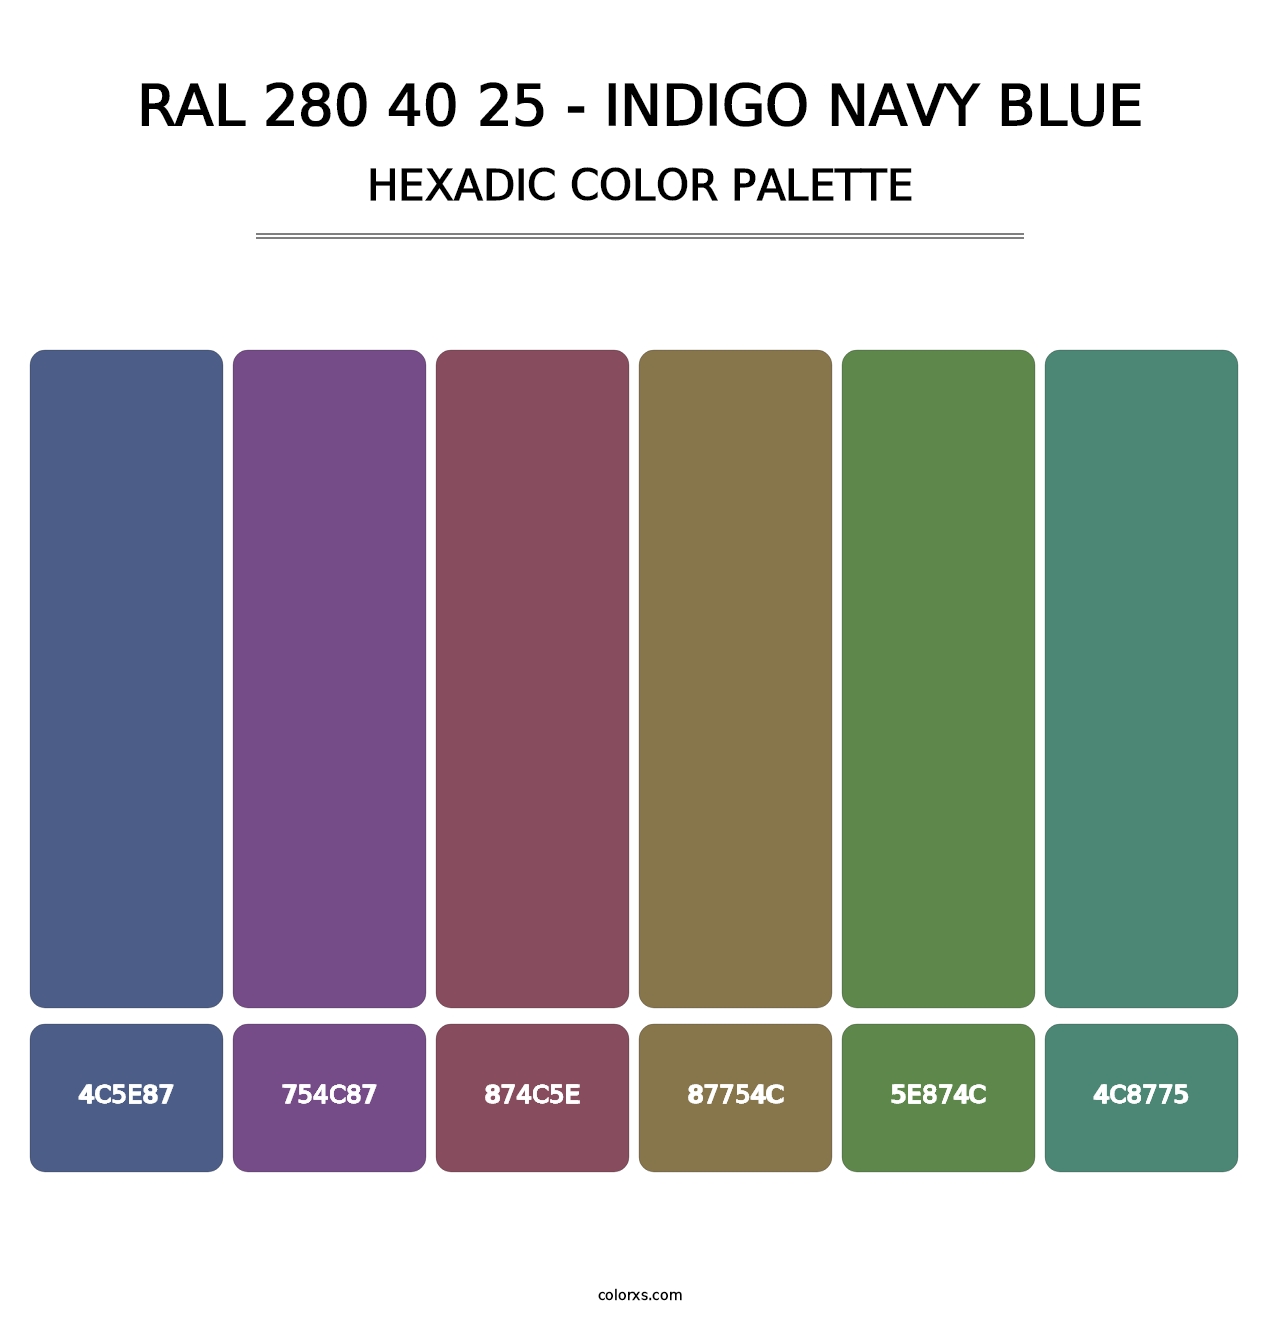 RAL 280 40 25 - Indigo Navy Blue - Hexadic Color Palette